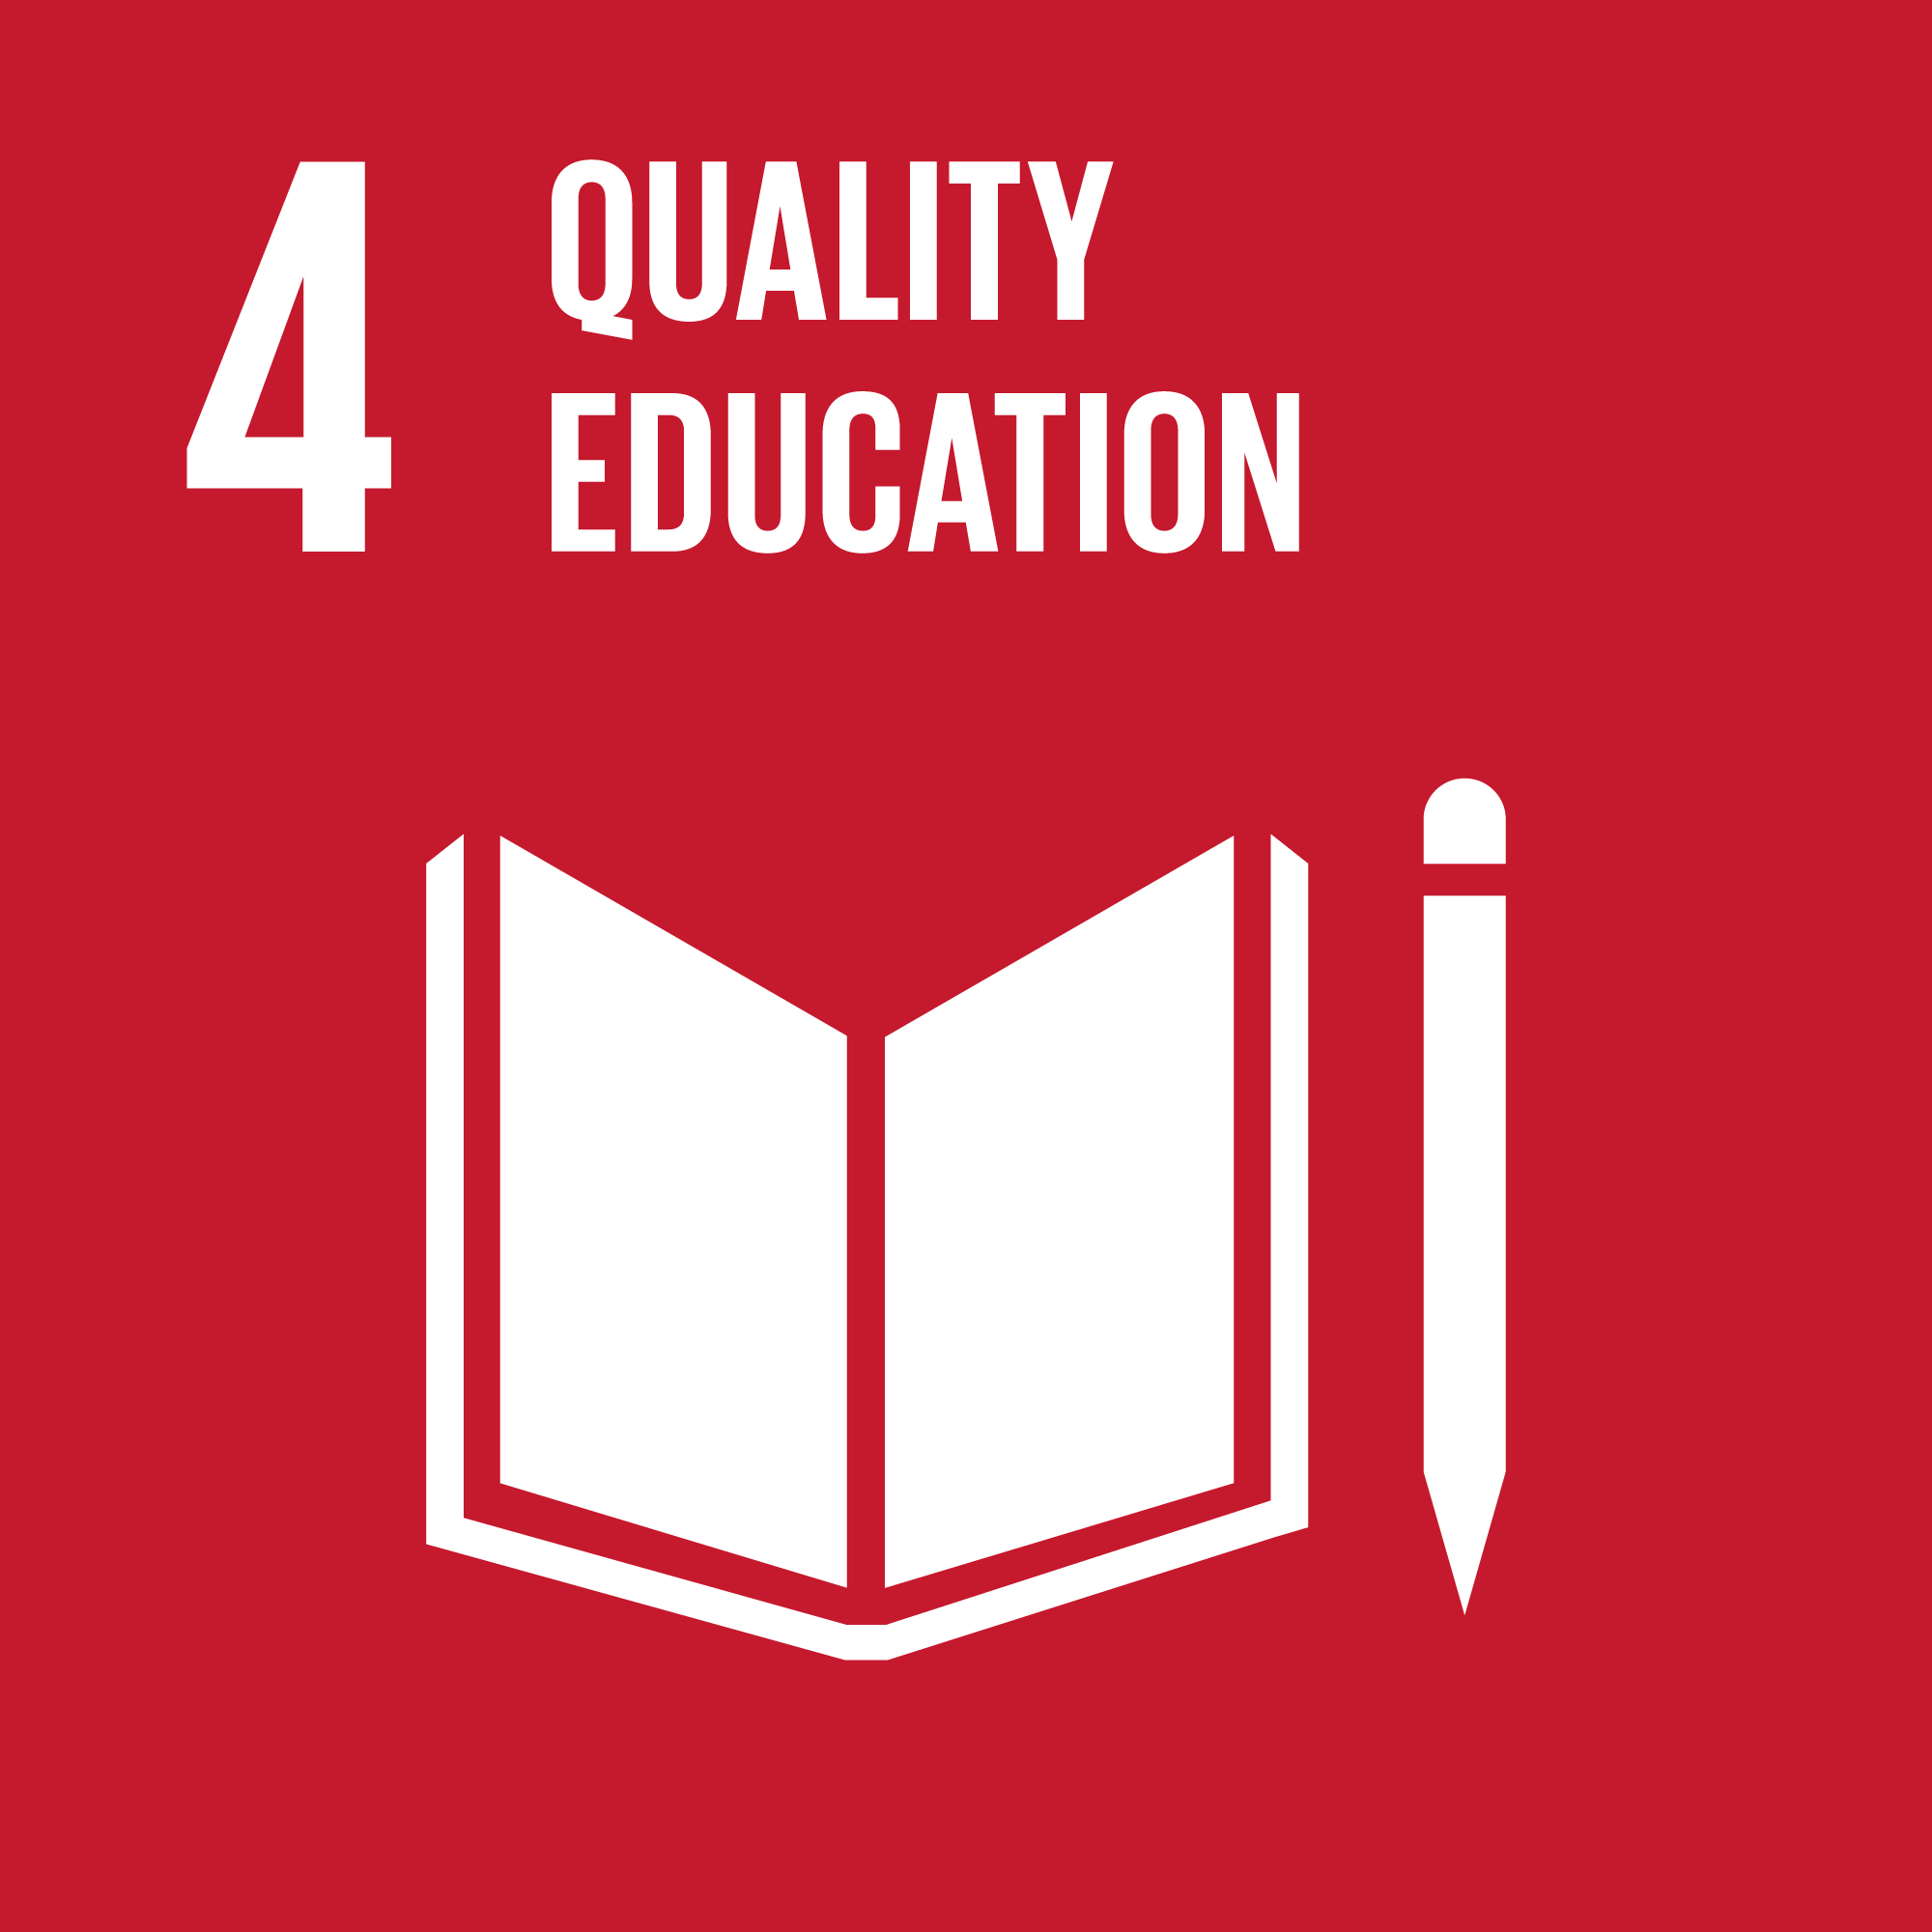 Agenda 2030 goal number 4: Quality education